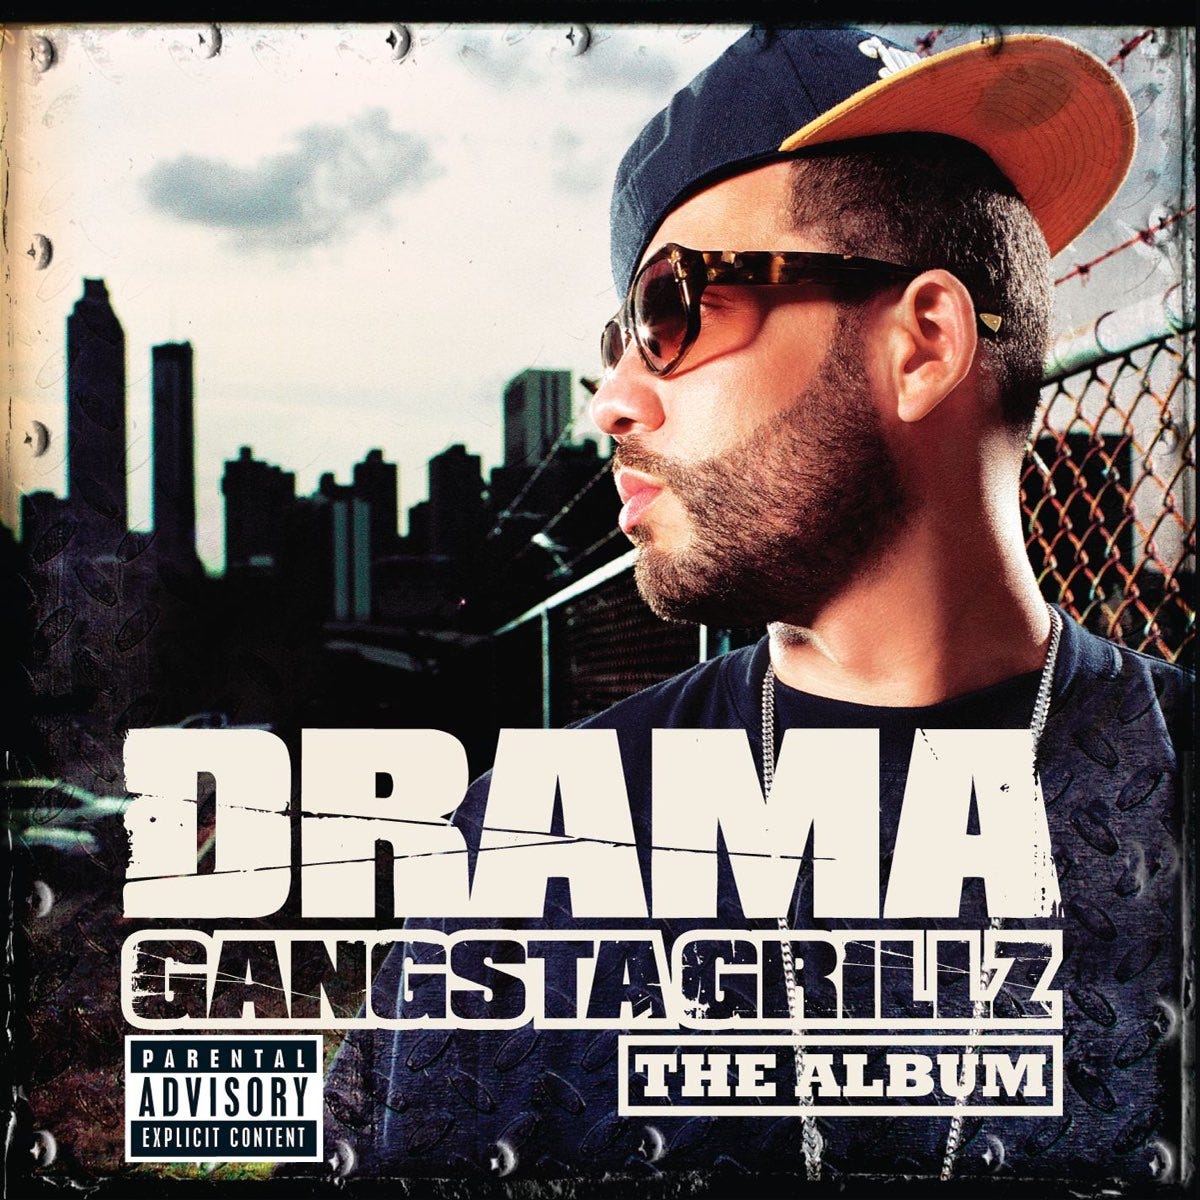 Gangsta Grillz: The Album by DJ Drama on Apple Music